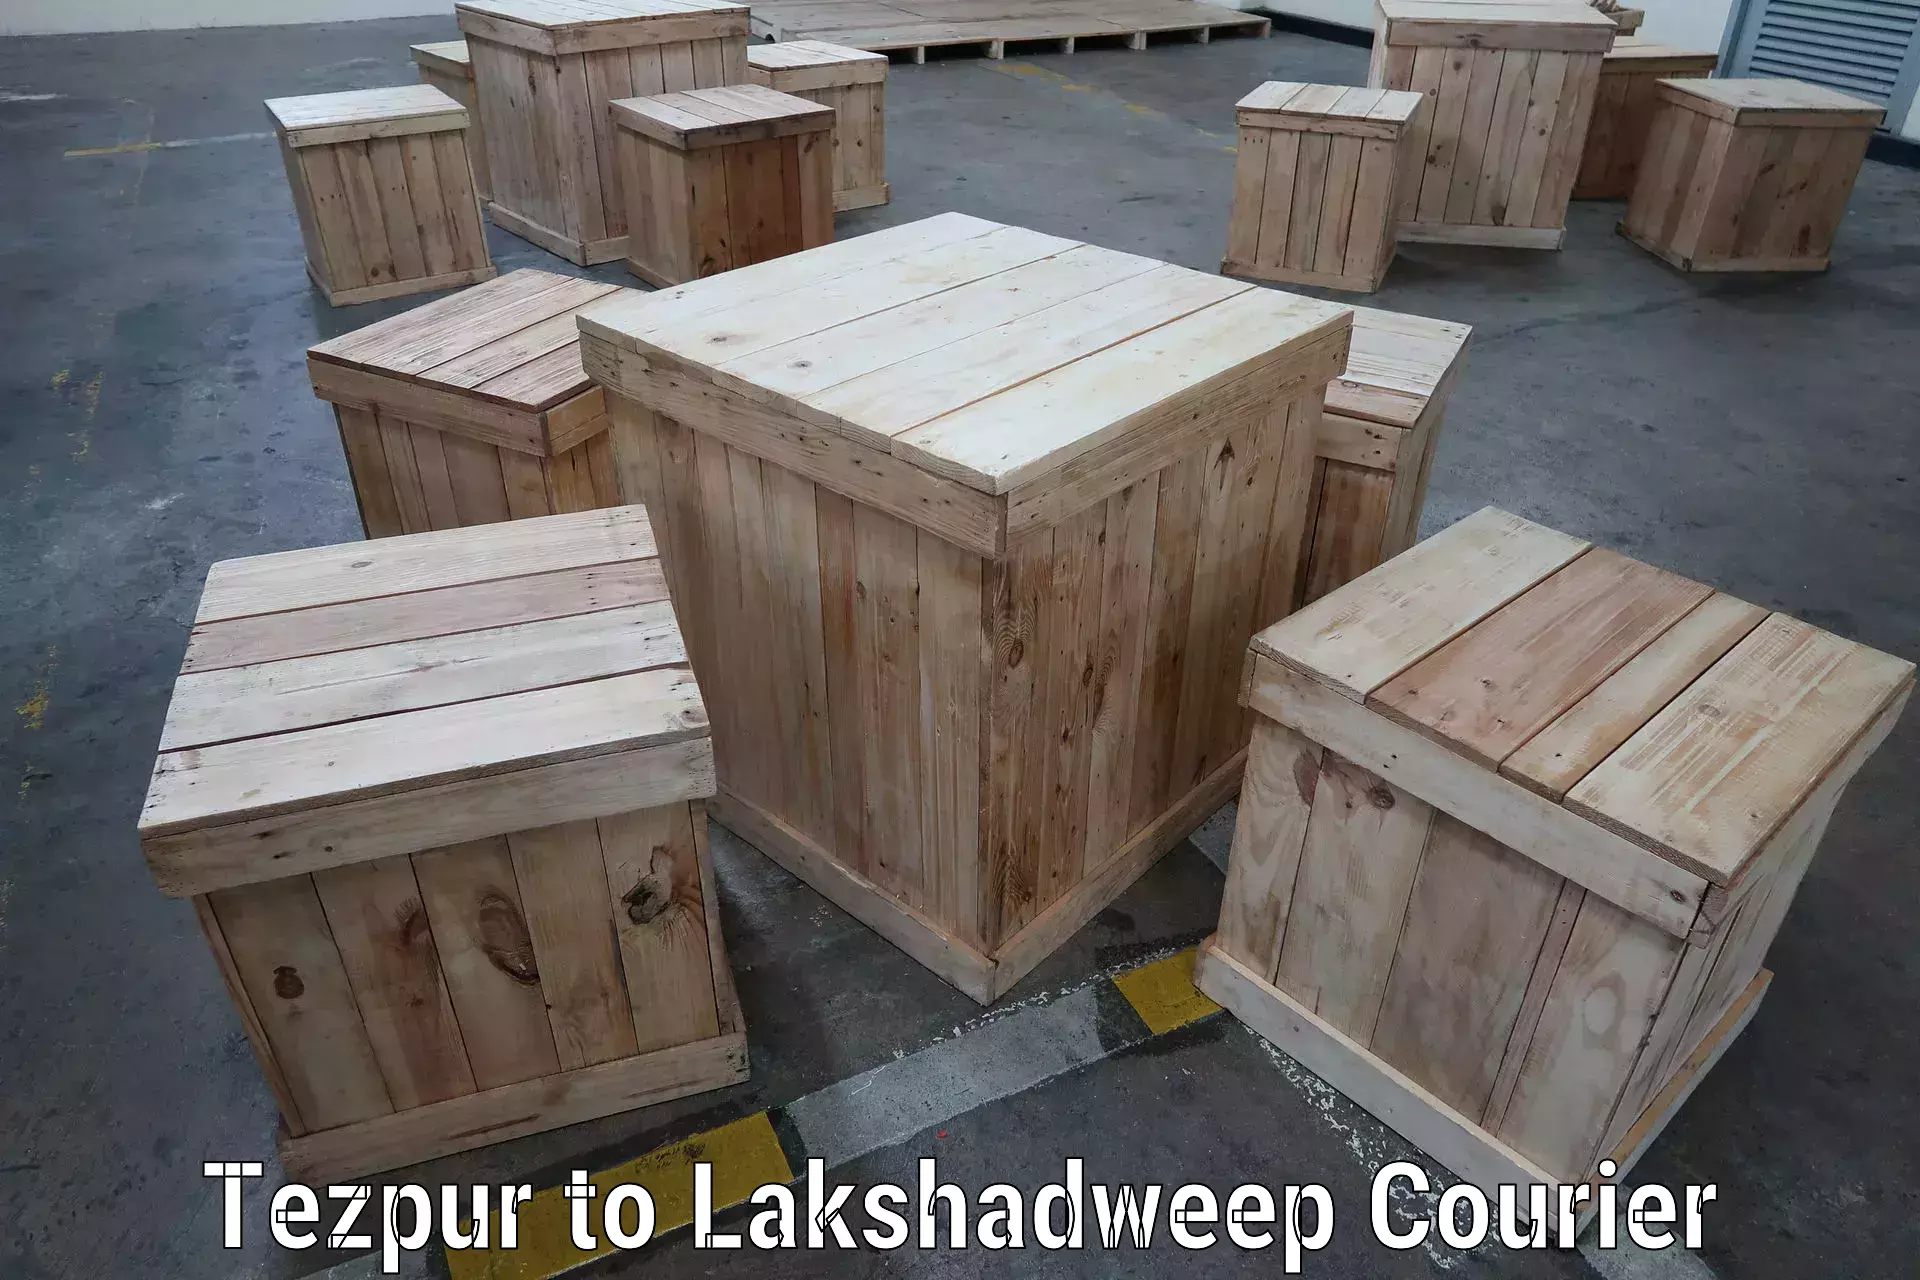 Digital courier platforms Tezpur to Lakshadweep